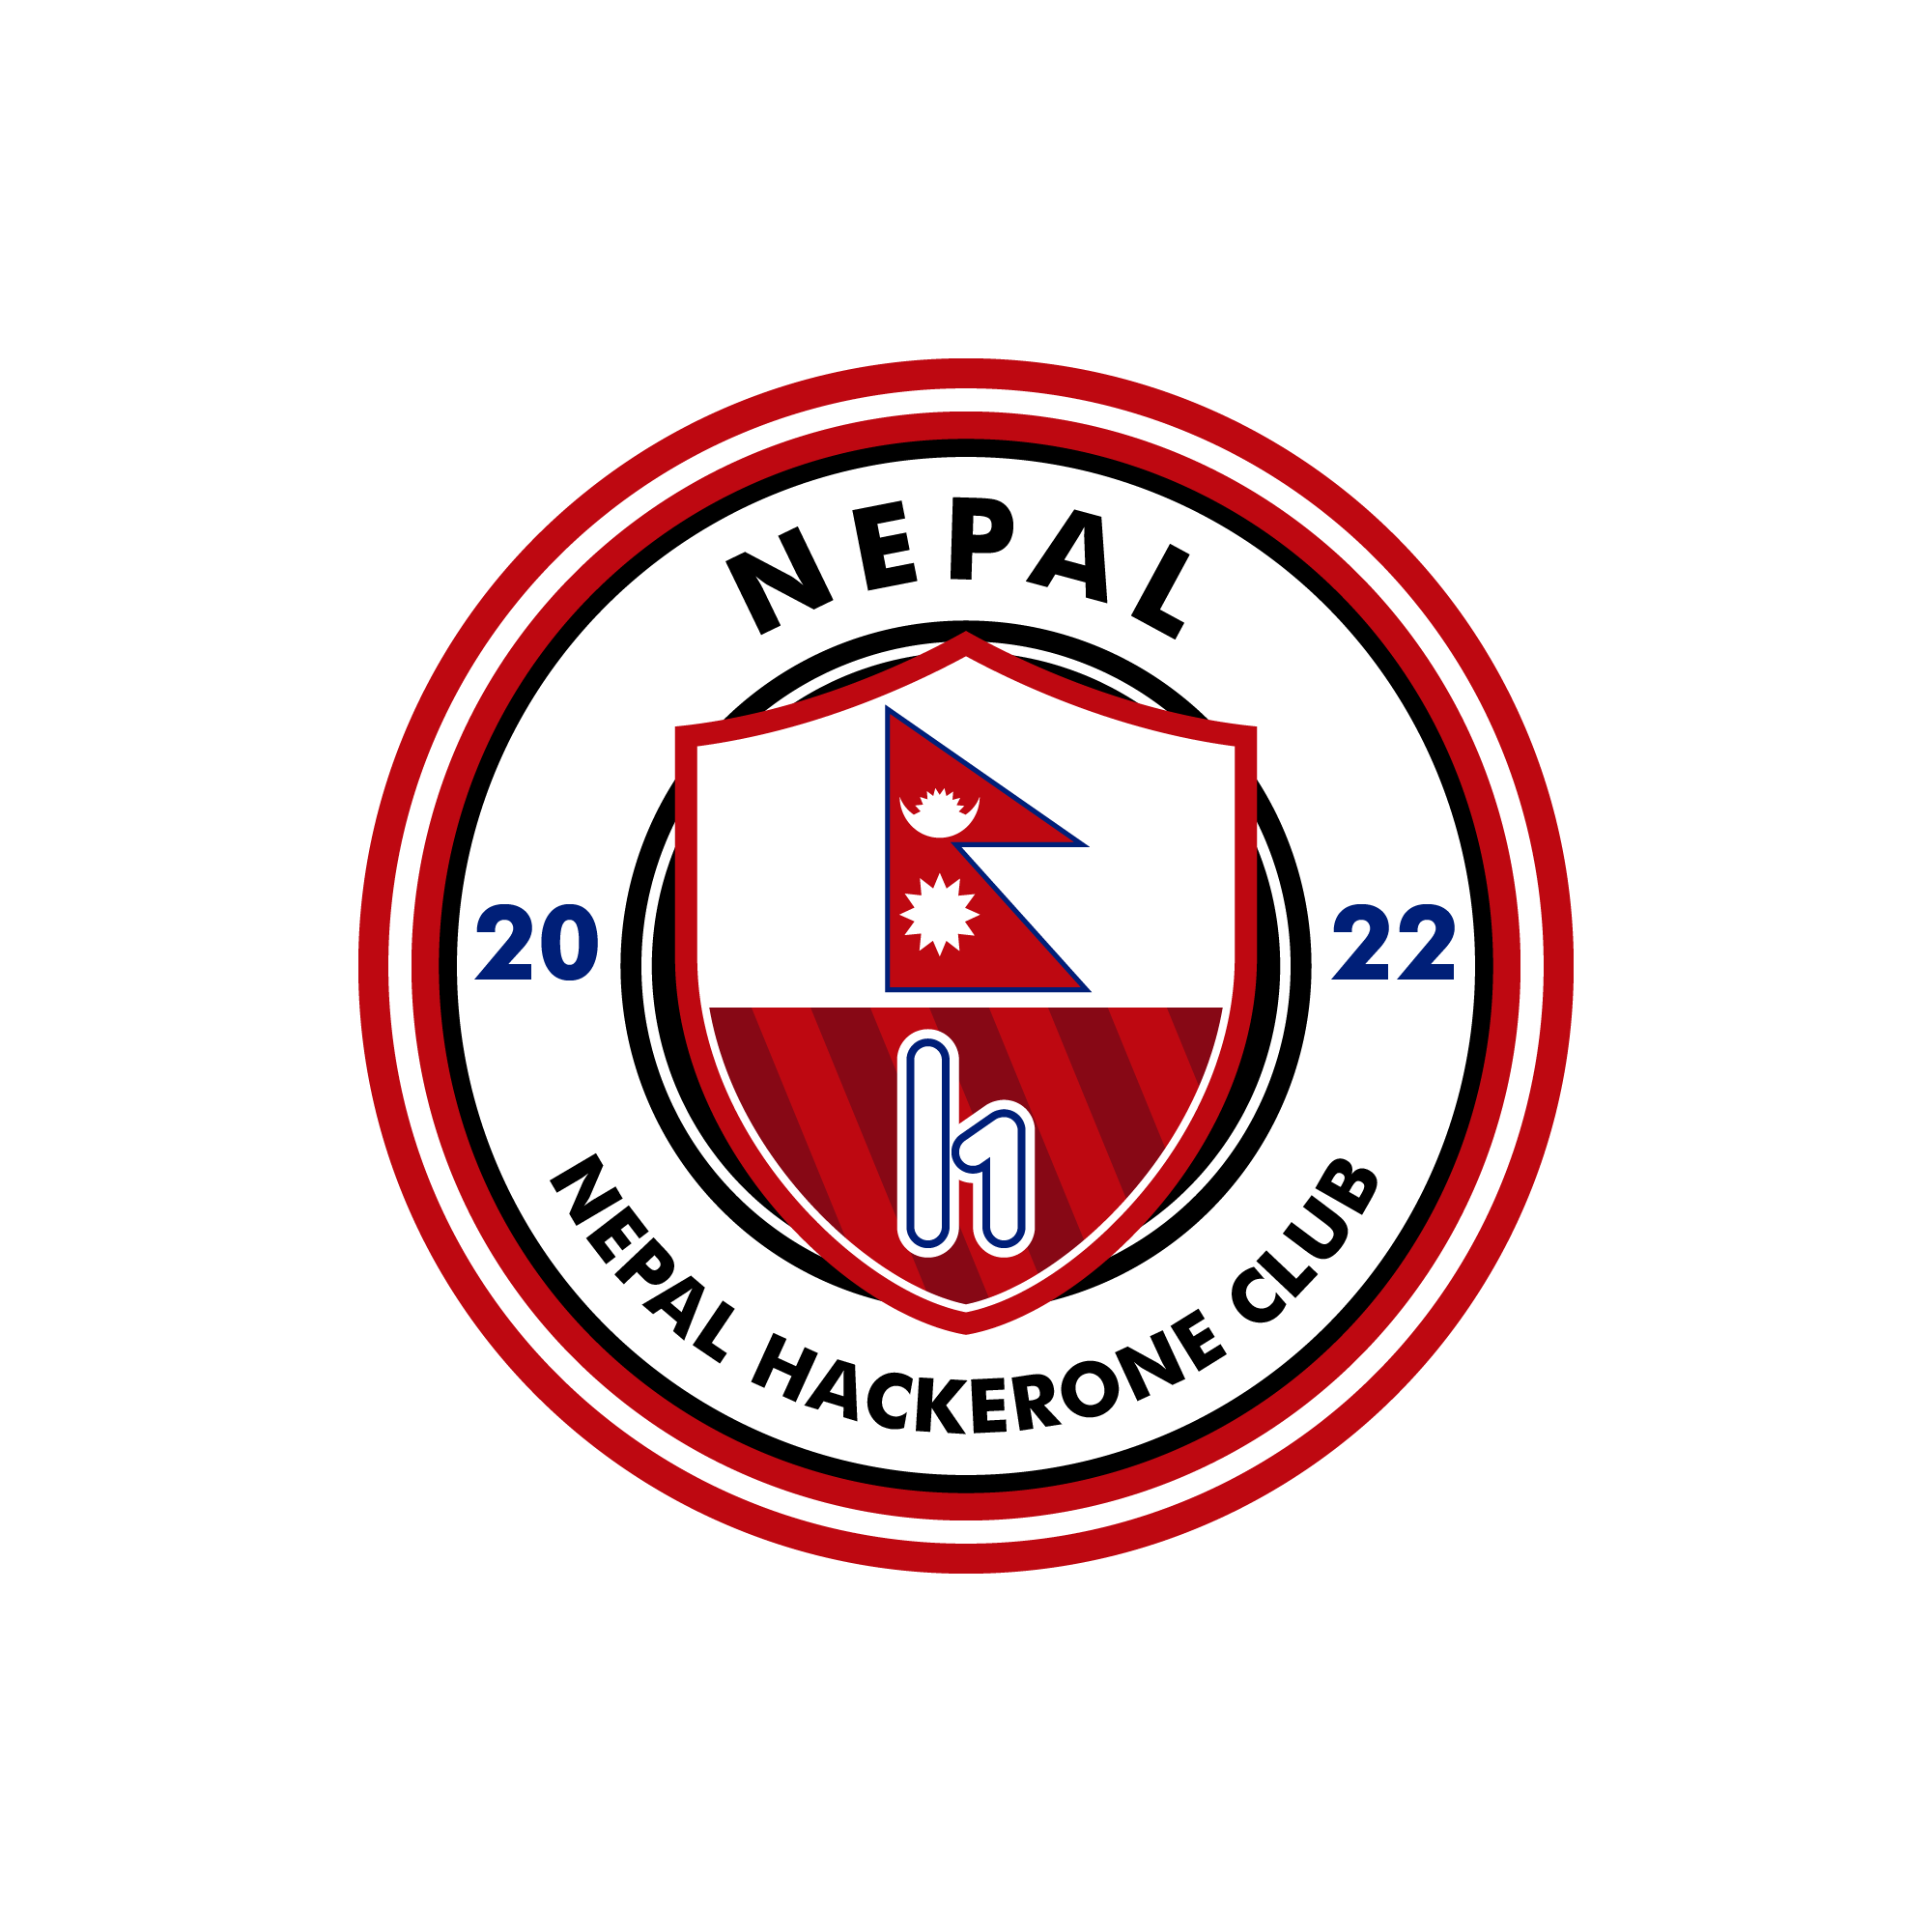 Nepal Ambassador Club logo